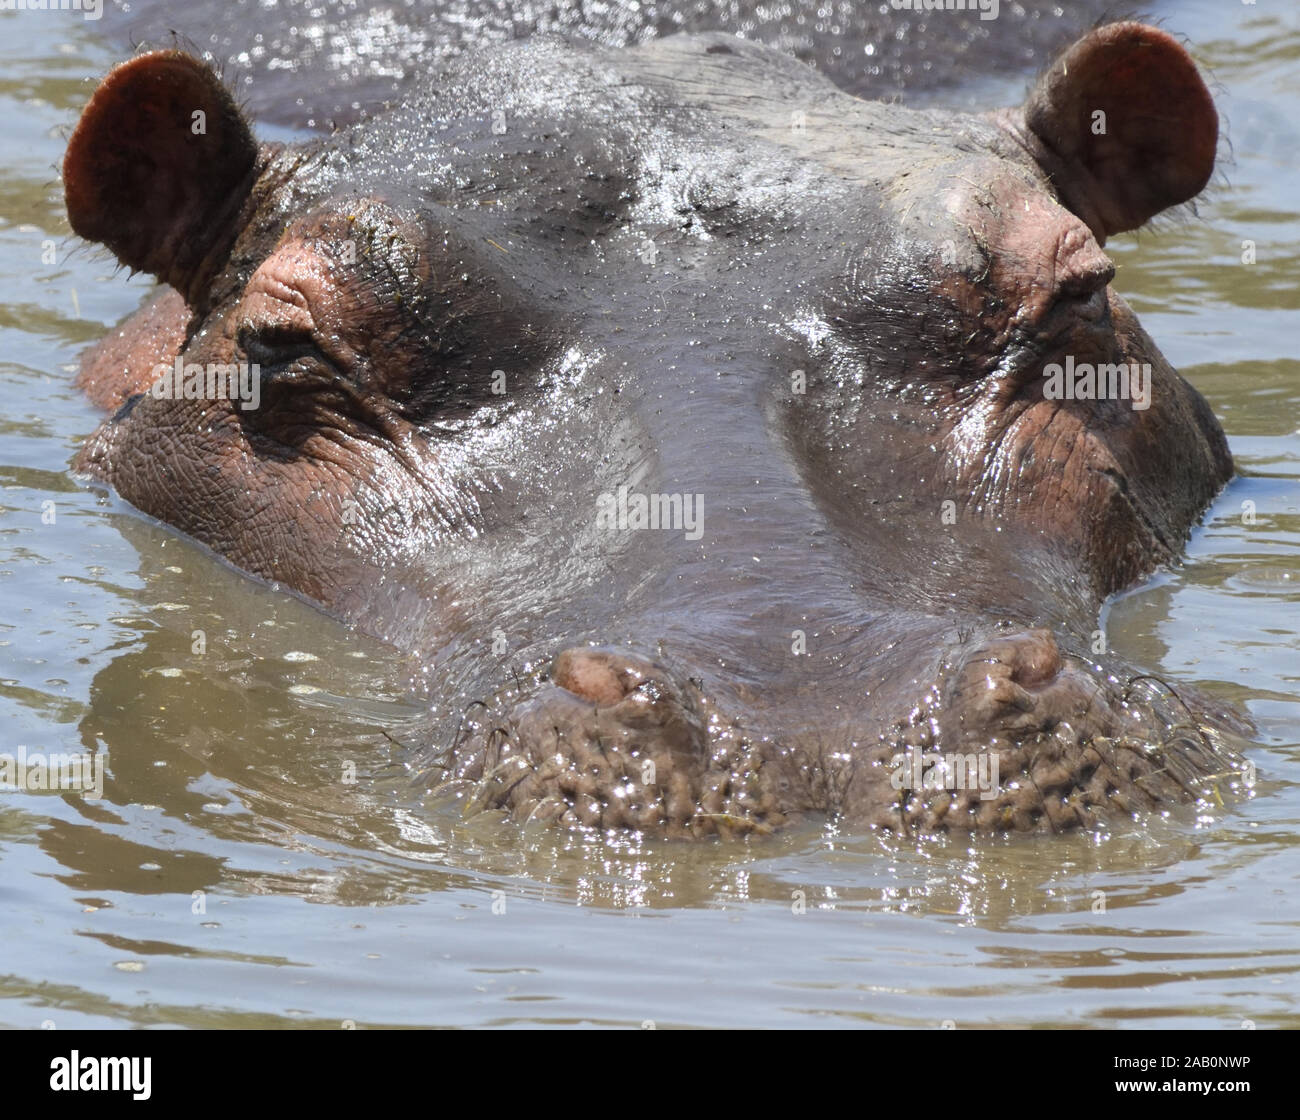 A common hippopotamus (Hippopotamus amphibius) closes its nostrils in preparation for putting its head under water. Serengeti National Park, Tanzania. Stock Photo